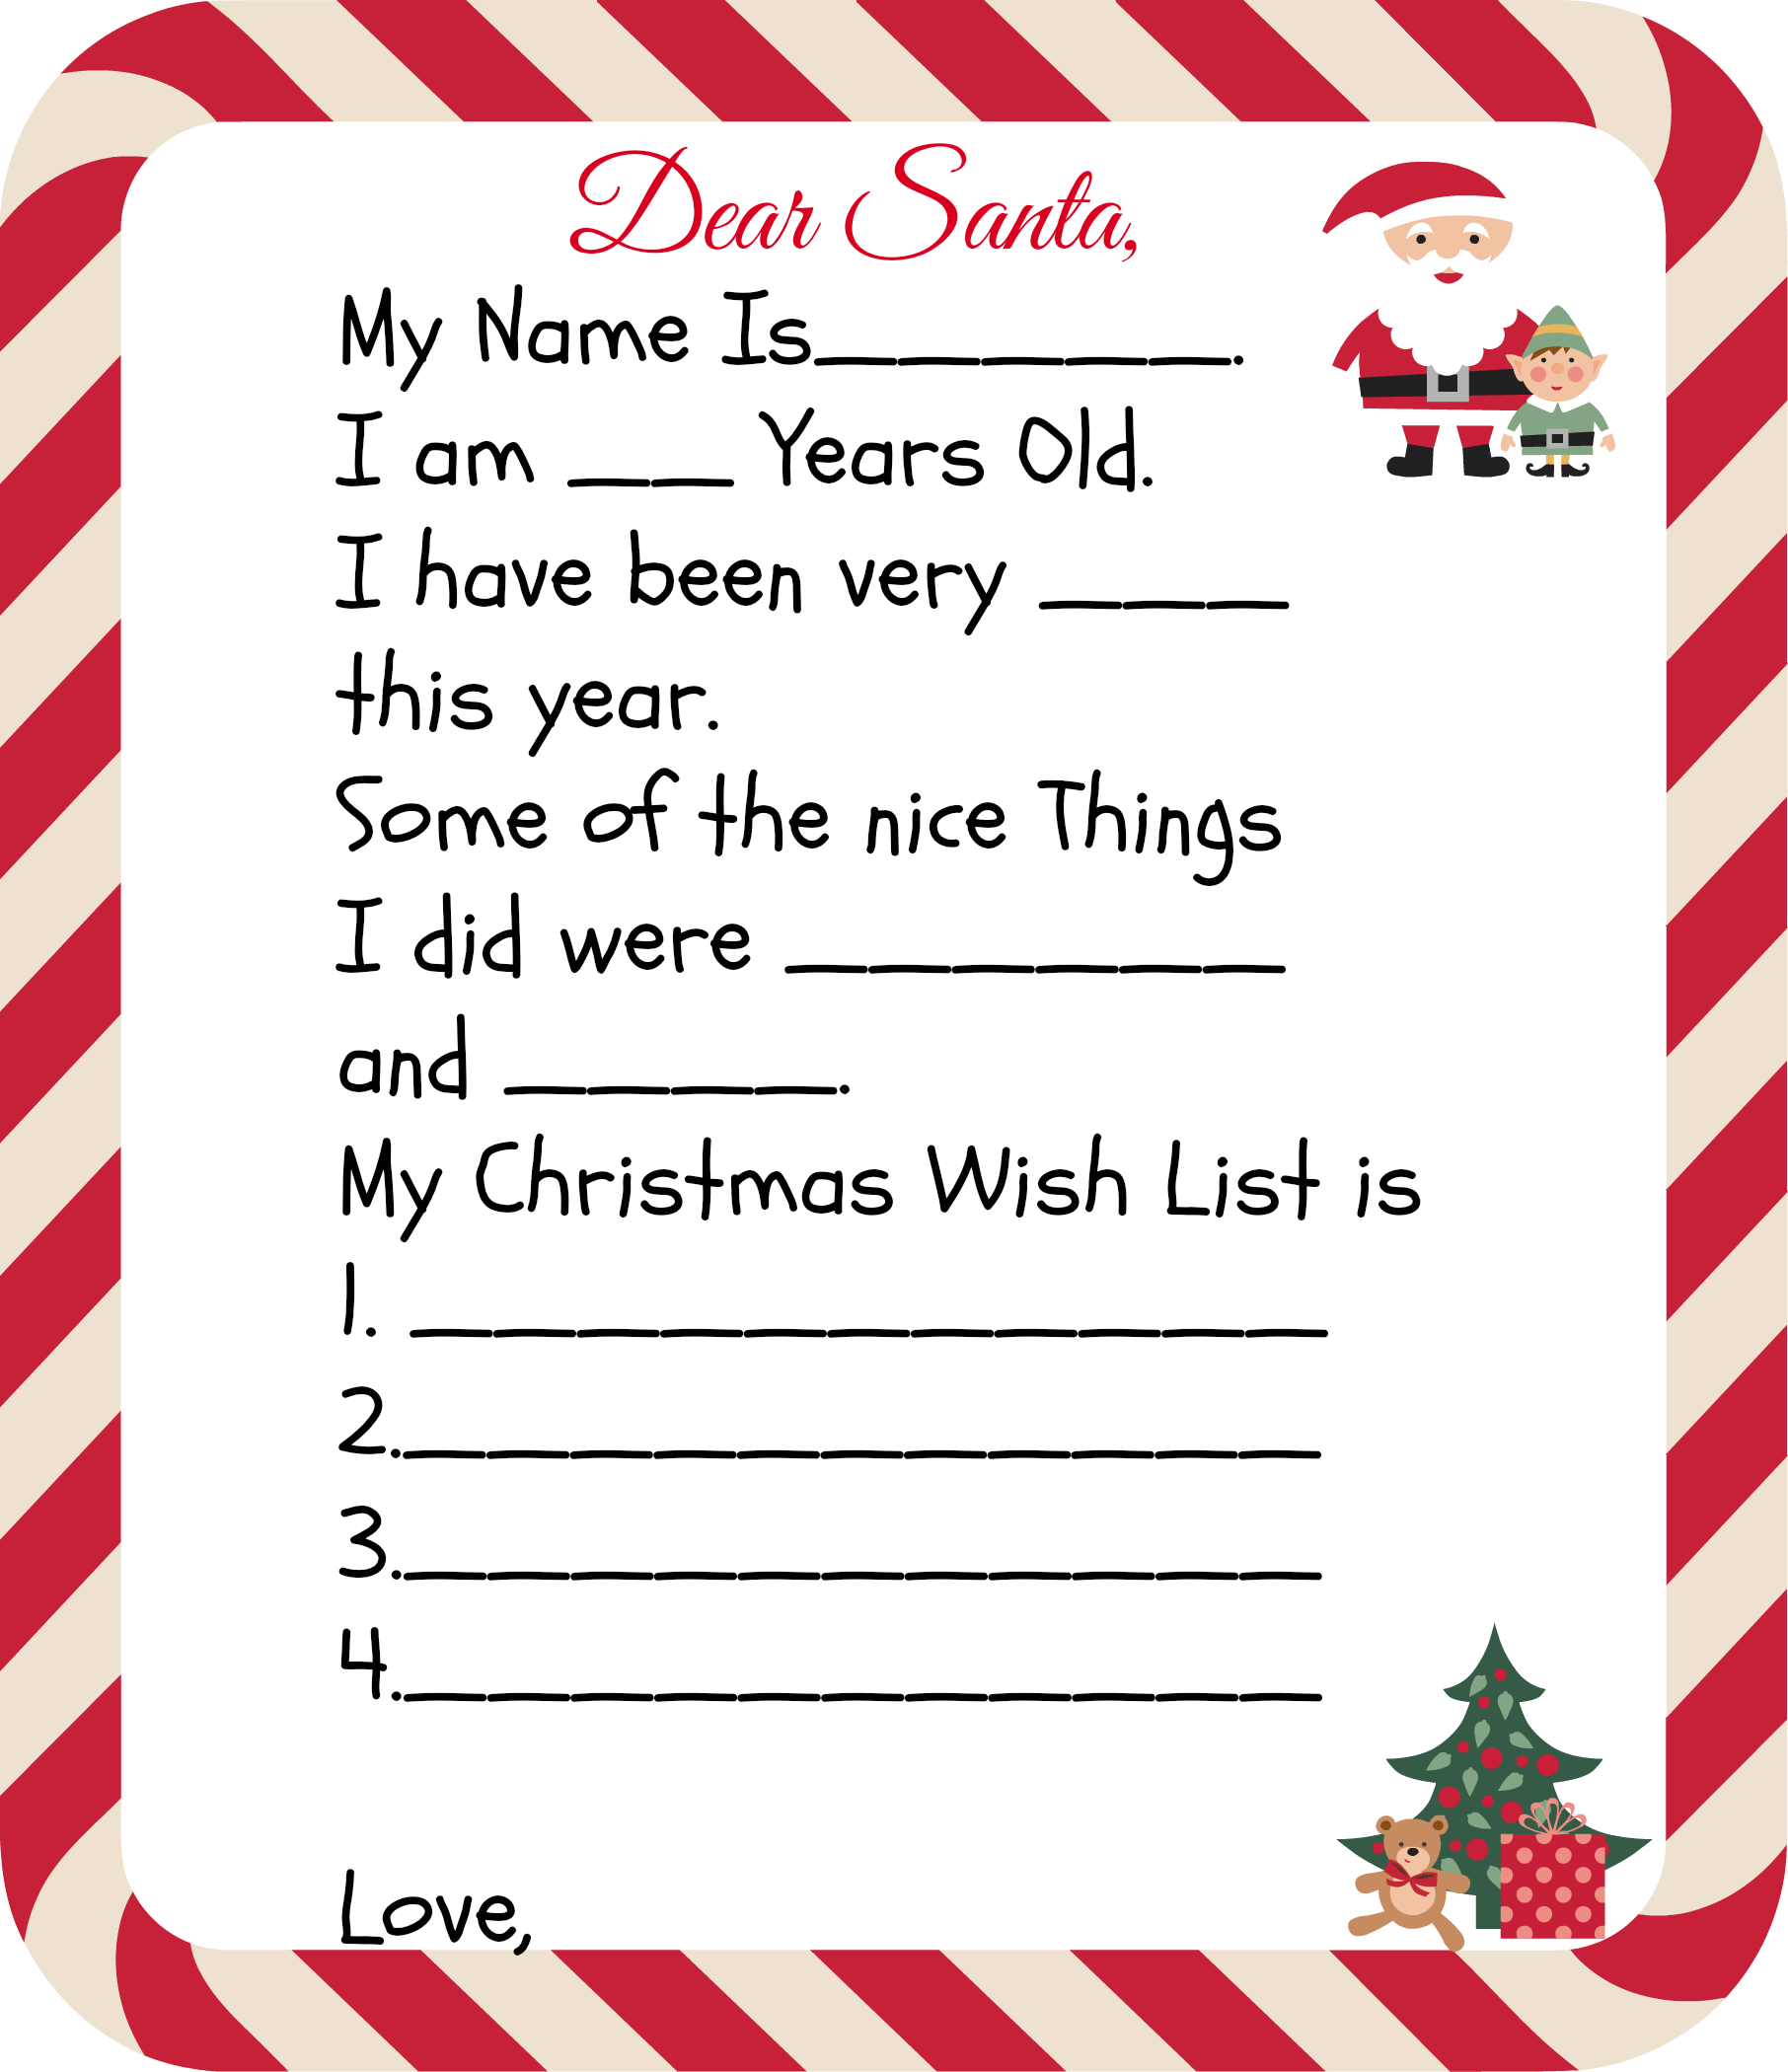 4 Heartwarming Letters to Explain Santa to Your Kids